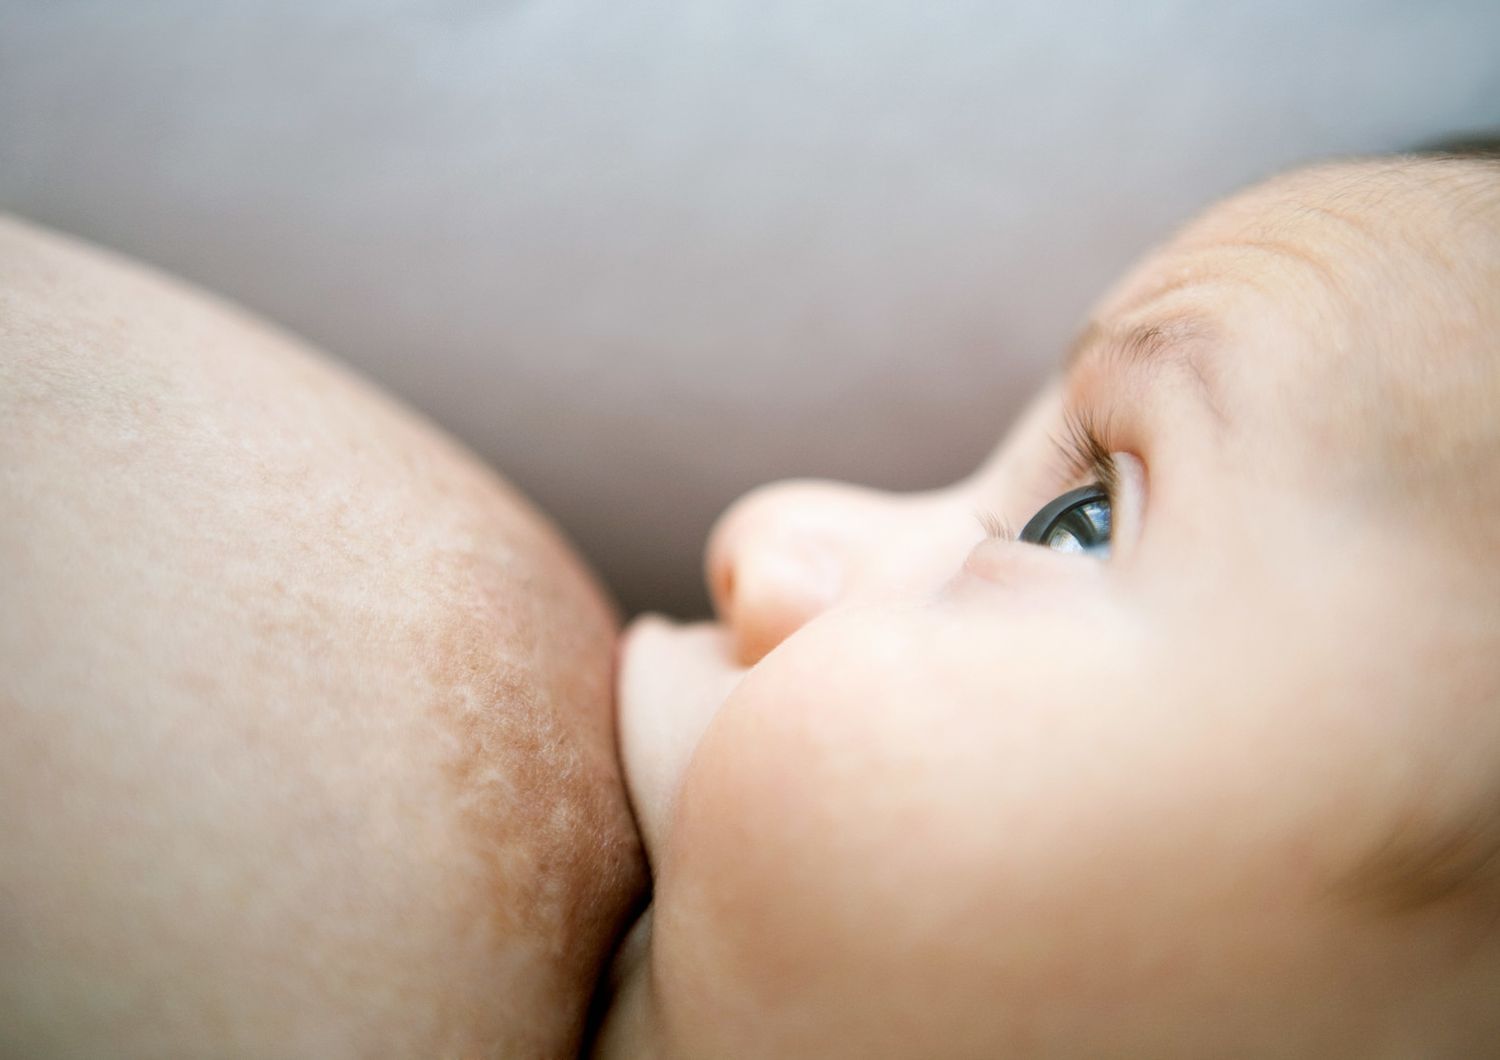 scoperta benefici allattamento seno dovuti batteri